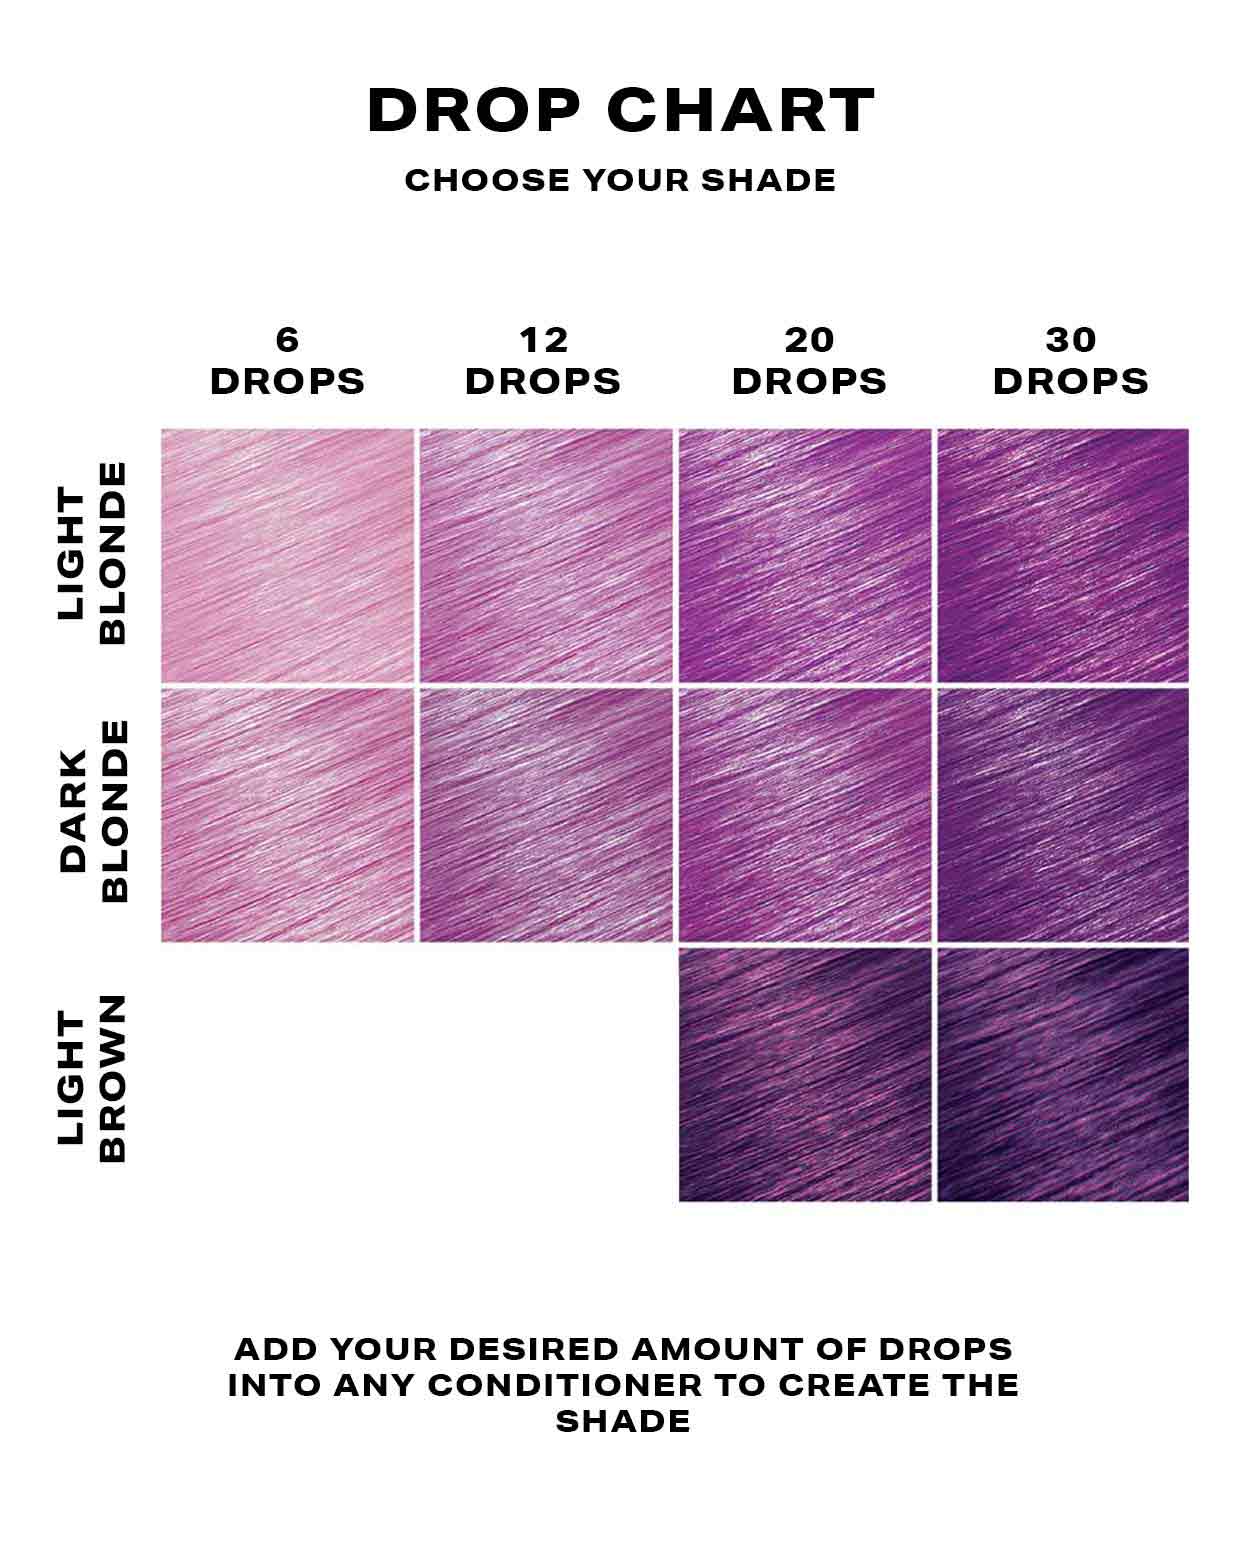 Purple hair dye DROP IT chart